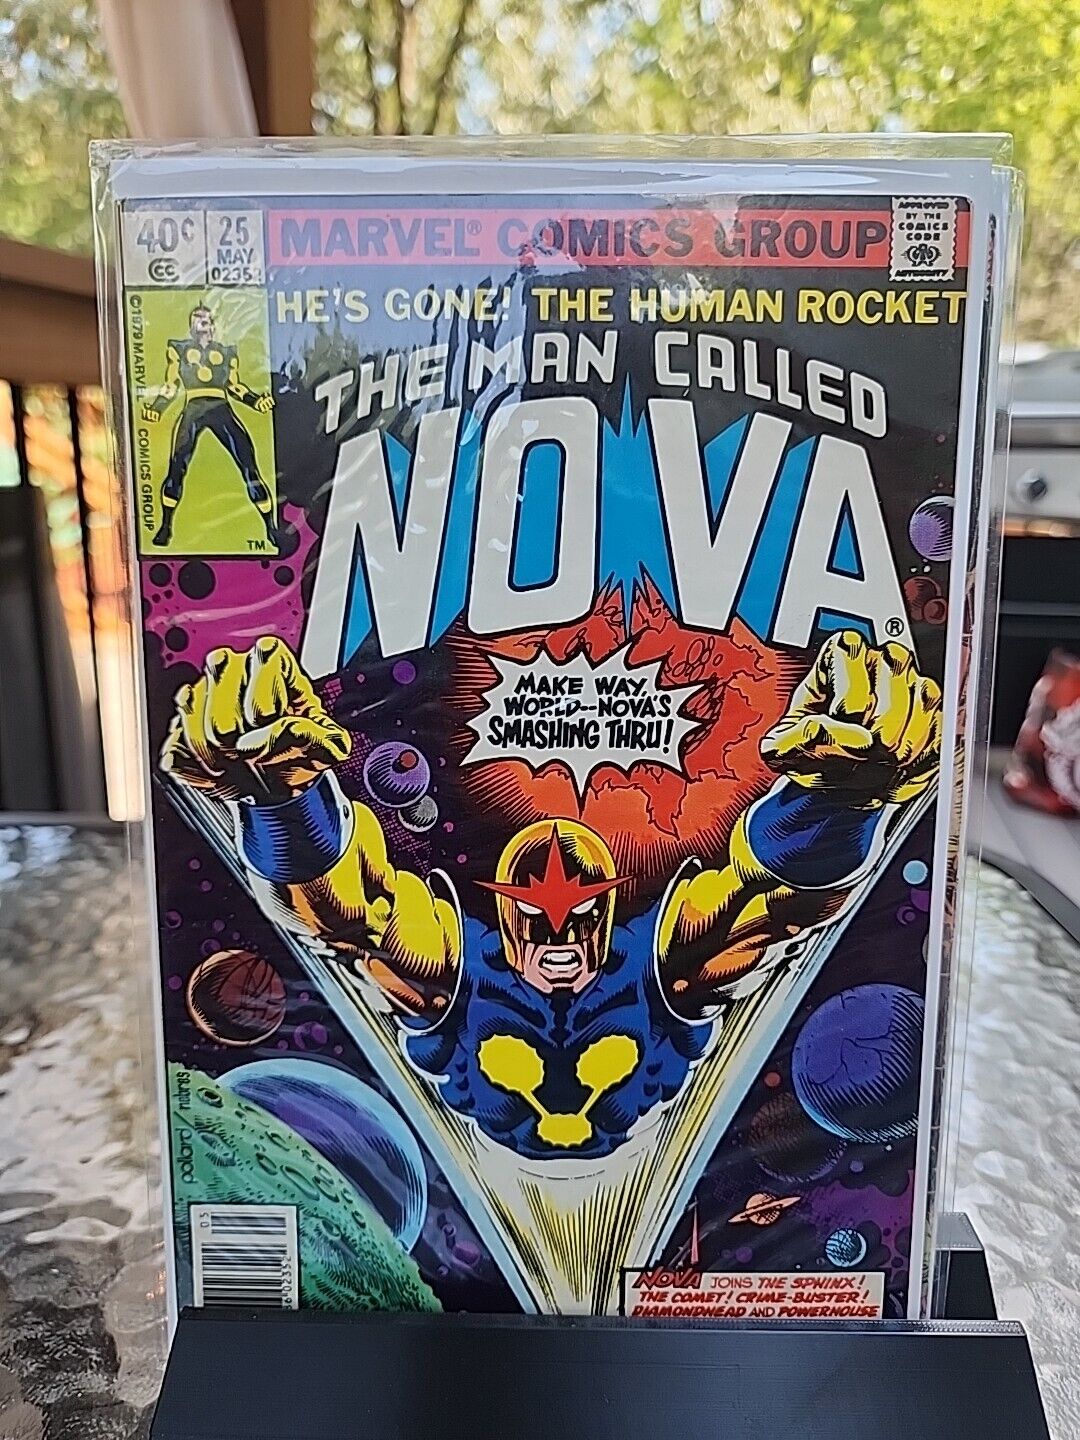 THE MAN CALLED NOVA # 25 LAST ISSUE Vol. 1 FINAL BATTLE SKRULLS VG 1979